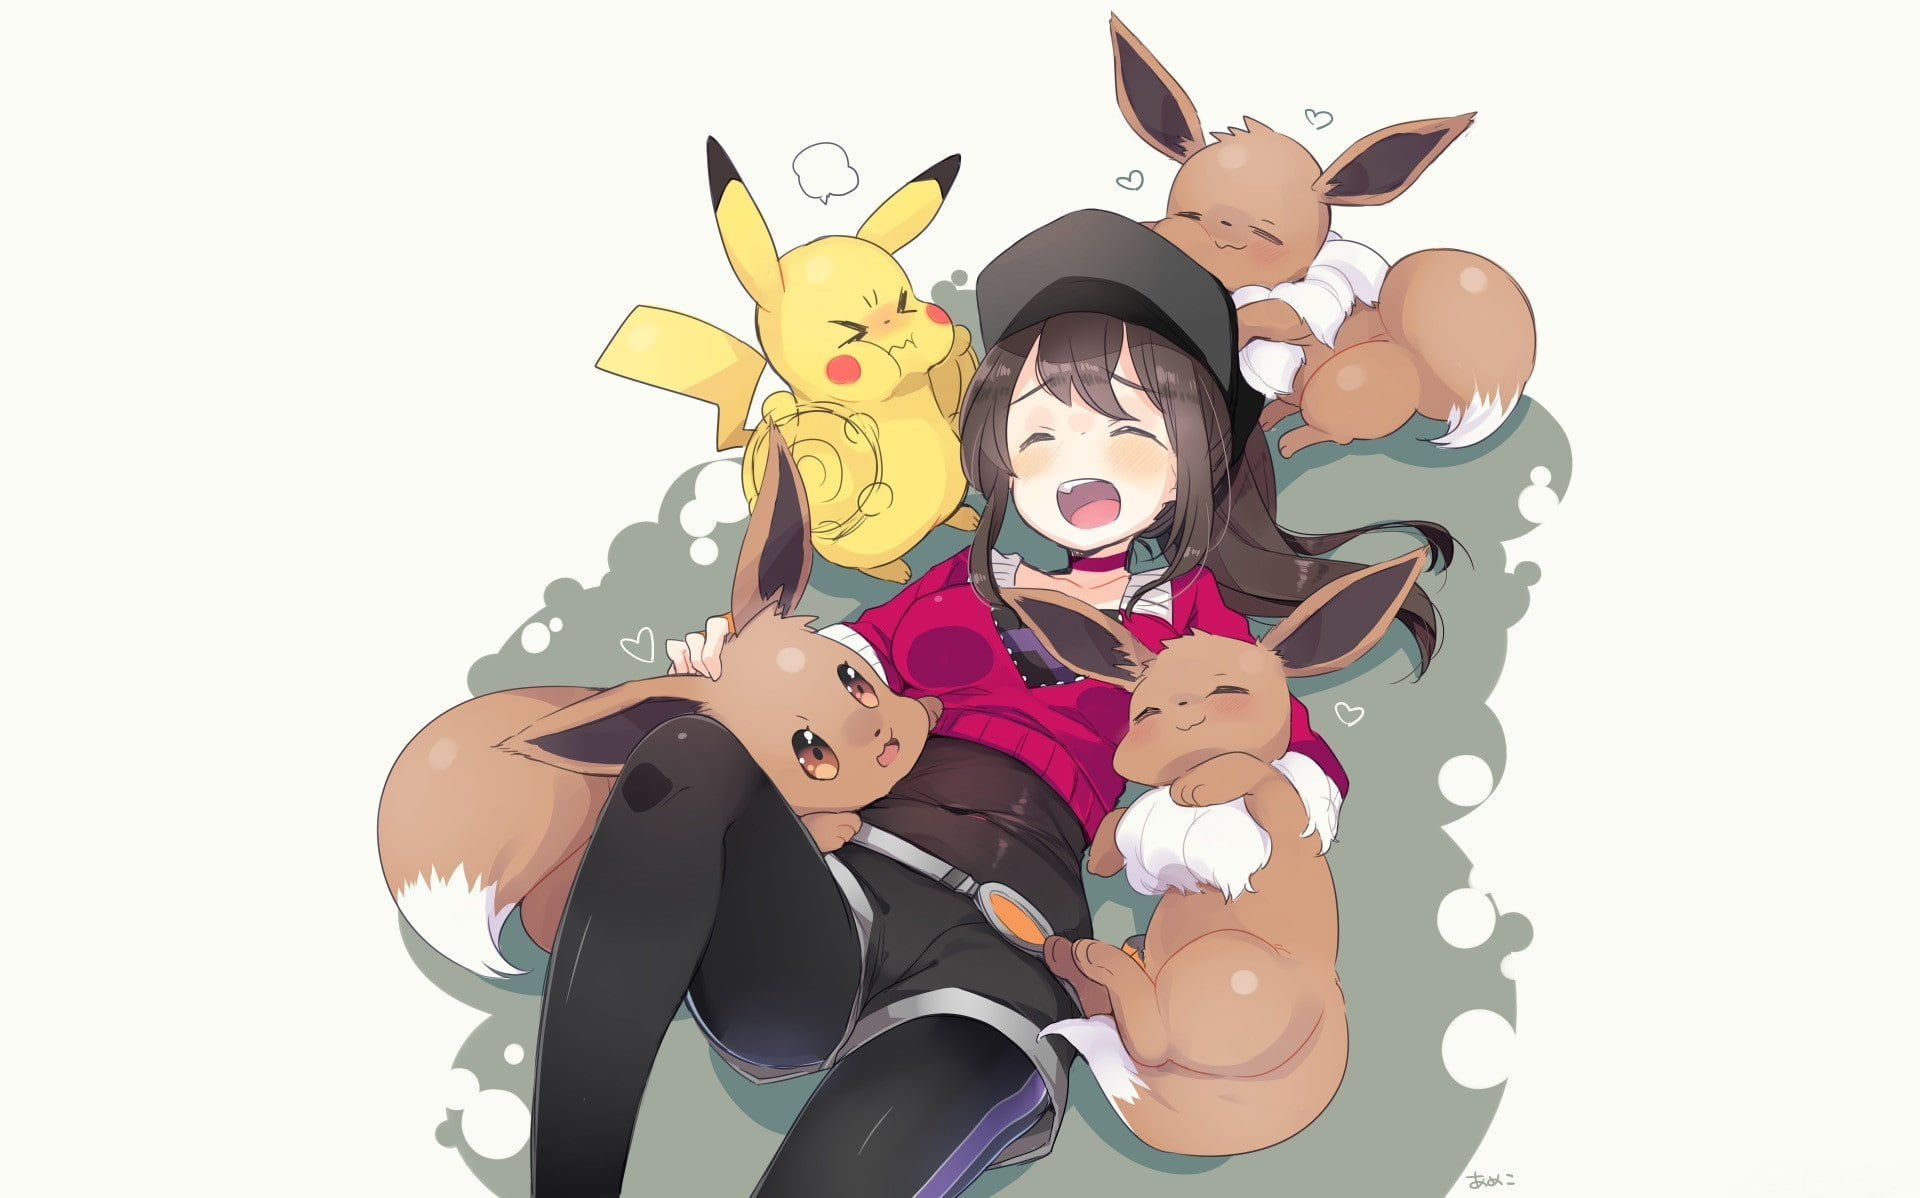 Pokémon, Pokémon GO, Eevee (Pokémon), Girl, Pikachu